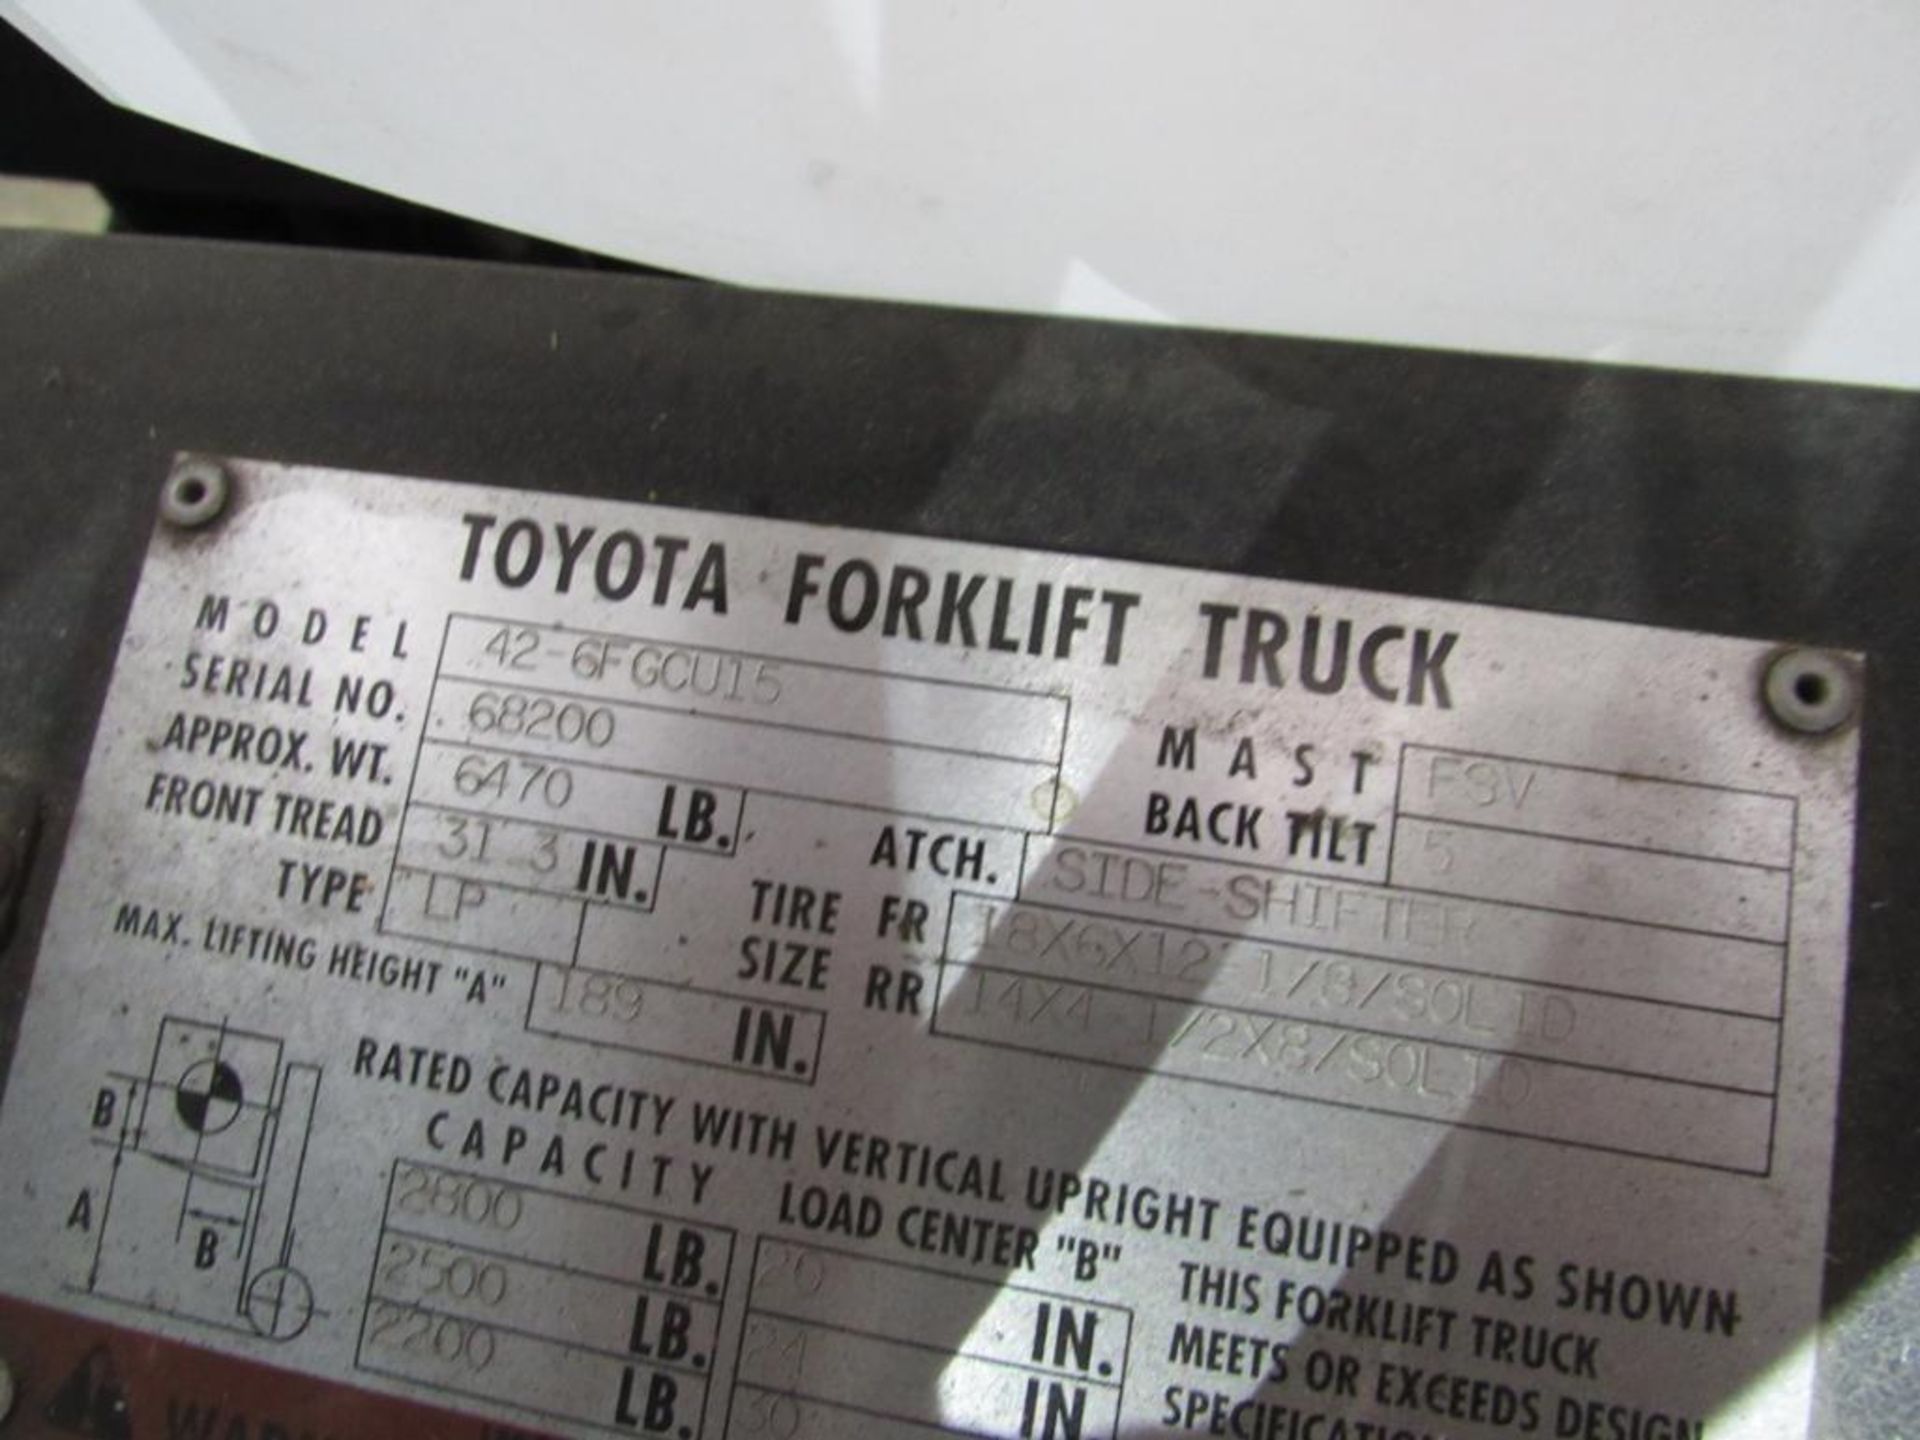 Toyota Forklift Model 42-6FGCU15, 2800 lb. Cap., 3-Stage Mast, Side Shift, LPG, 189 in. Lift Height, - Image 5 of 5